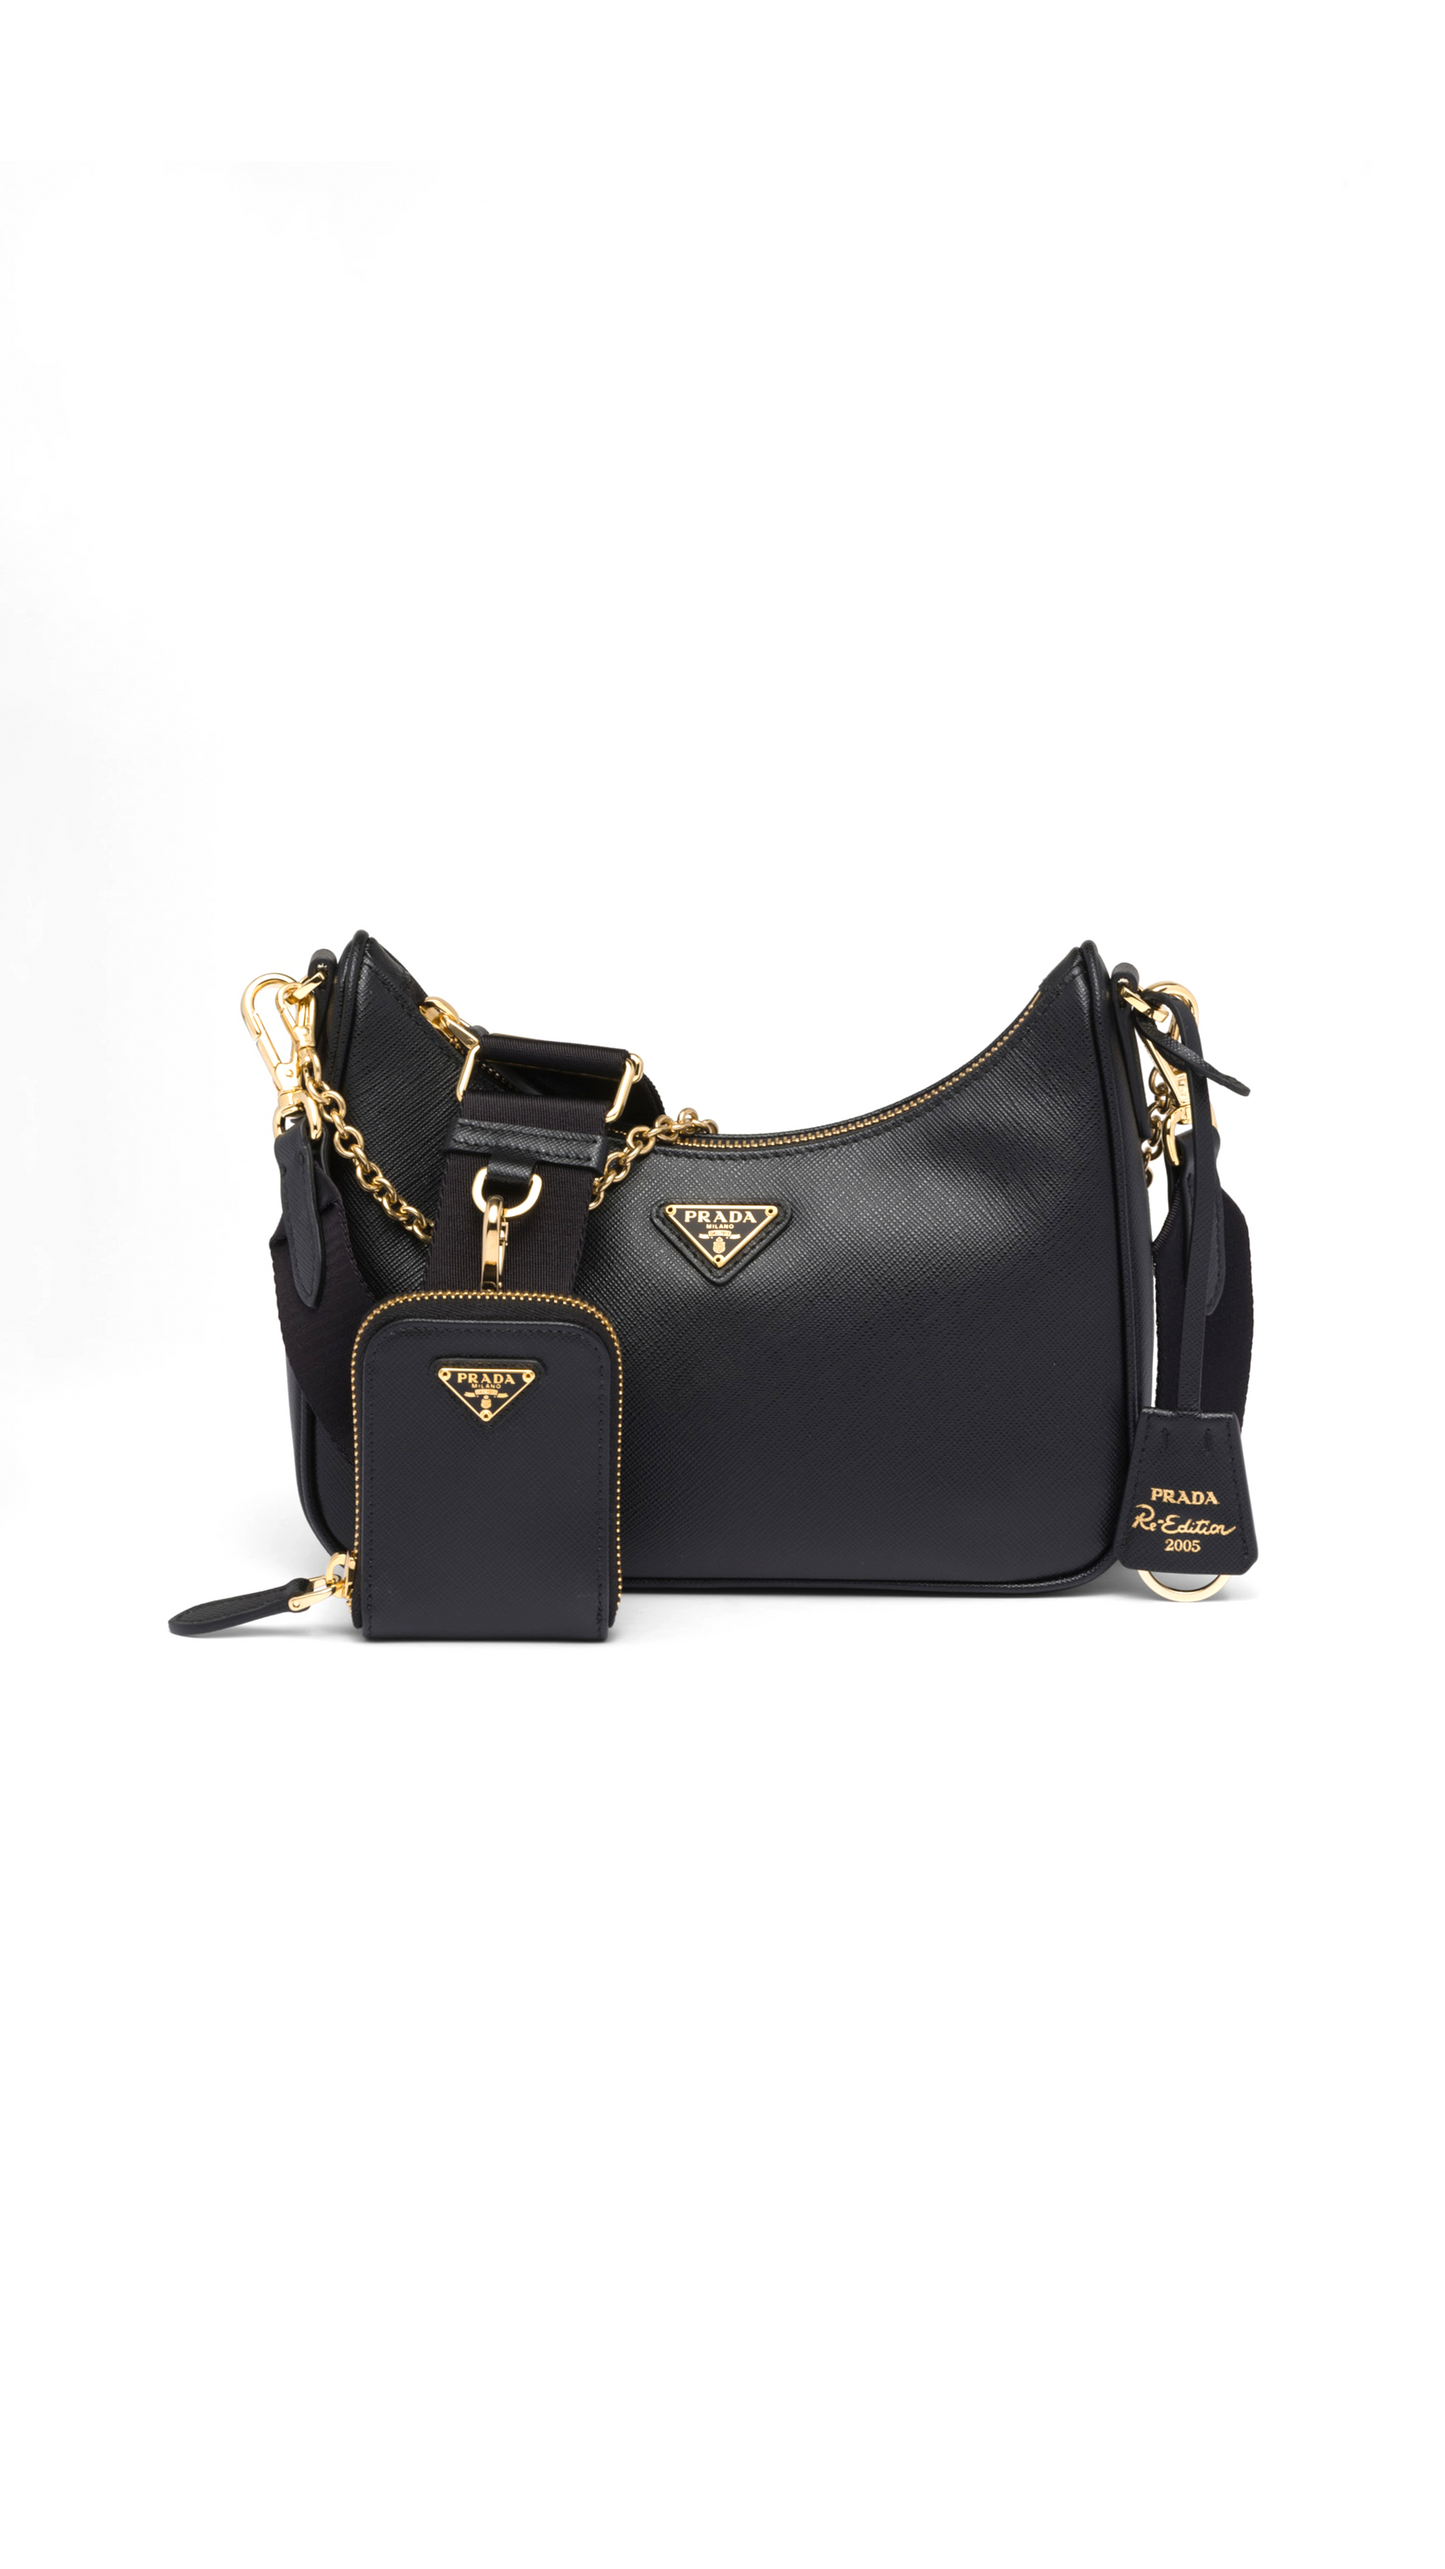 Prada Re-Edition 2005 Saffiano Leather Bag - Black